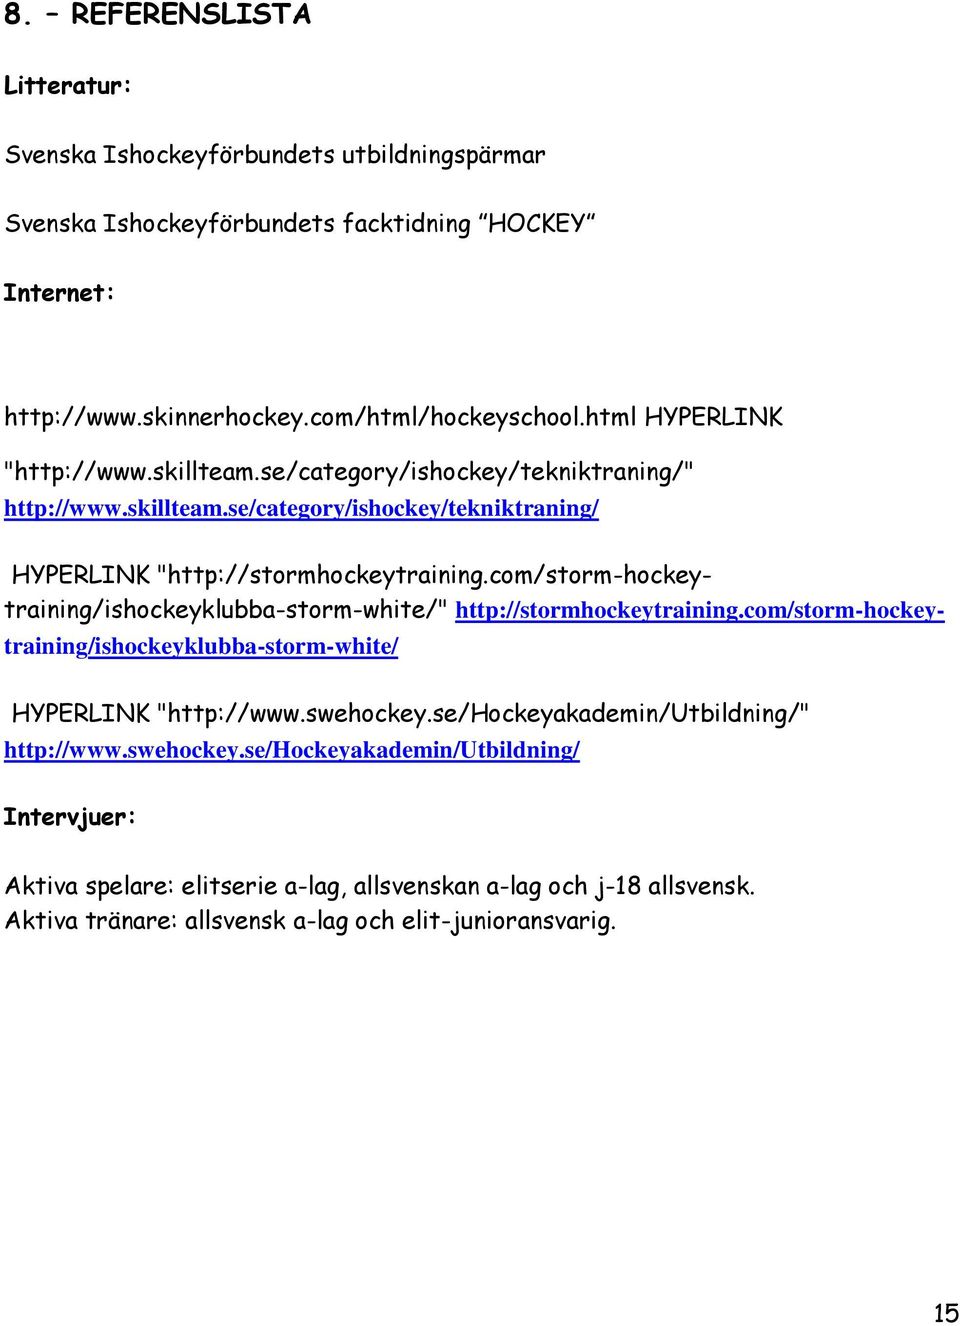 com/storm-hockeytraining/ishockeyklubba-storm-white/" http://stormhockeytraining.com/storm-hockeytraining/ishockeyklubba-storm-white/ HYPERLINK "http://www.swehockey.